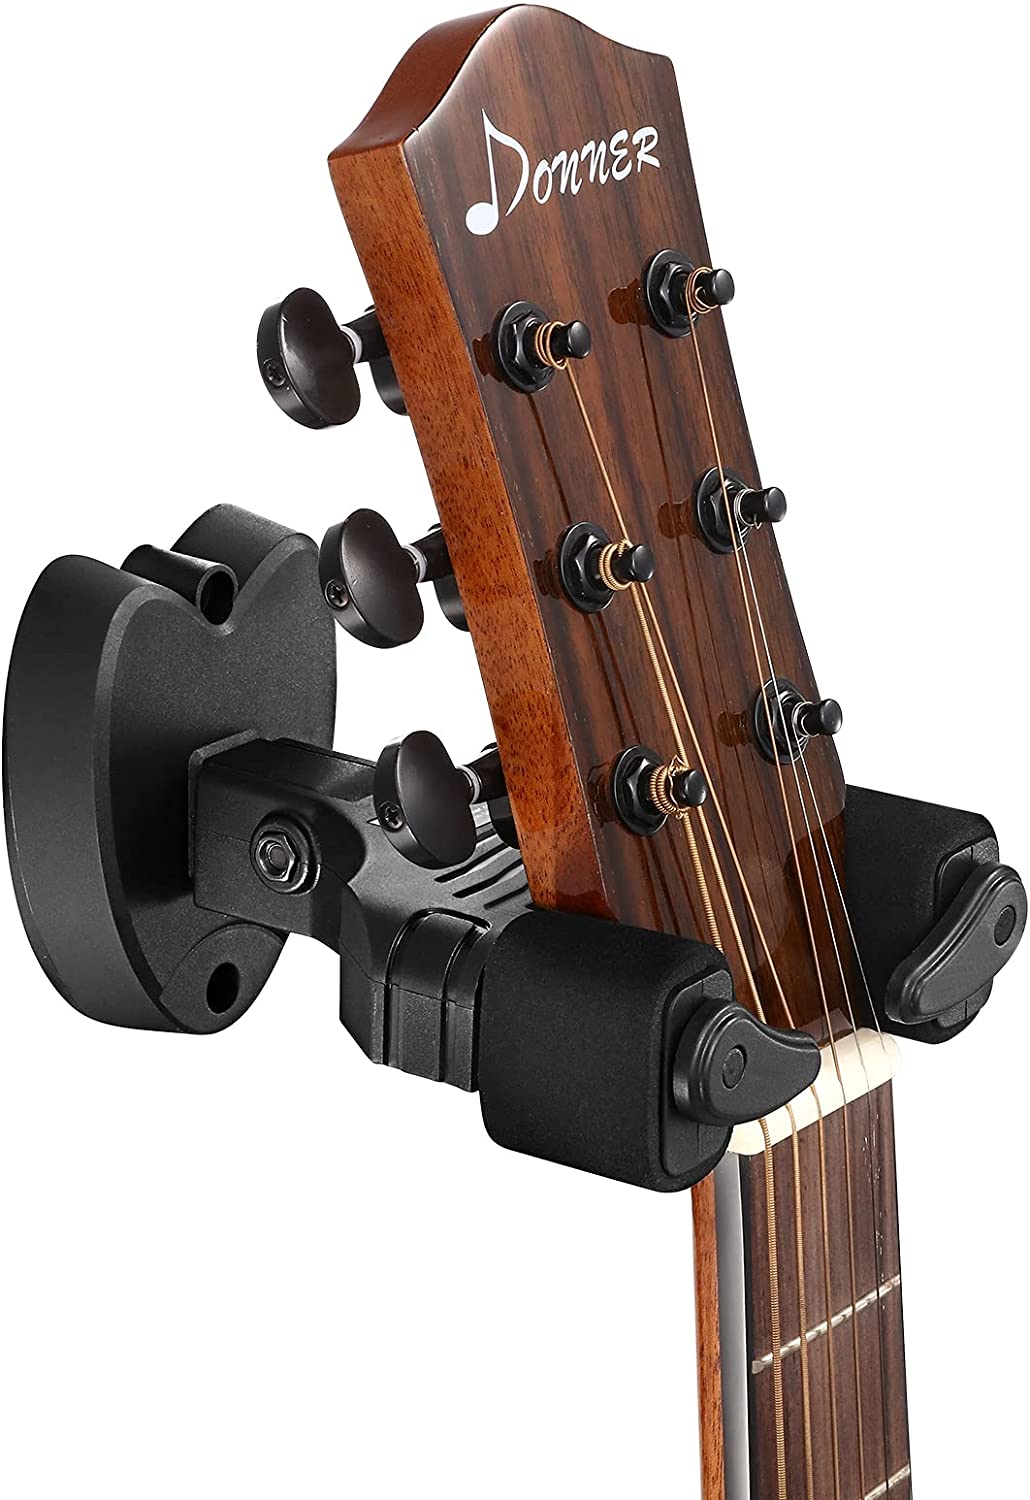 Donner Locking Guitar Wall Mount 1-Pack, Auto Lock Guitar Wall Hanger For Guitar Bass, Black